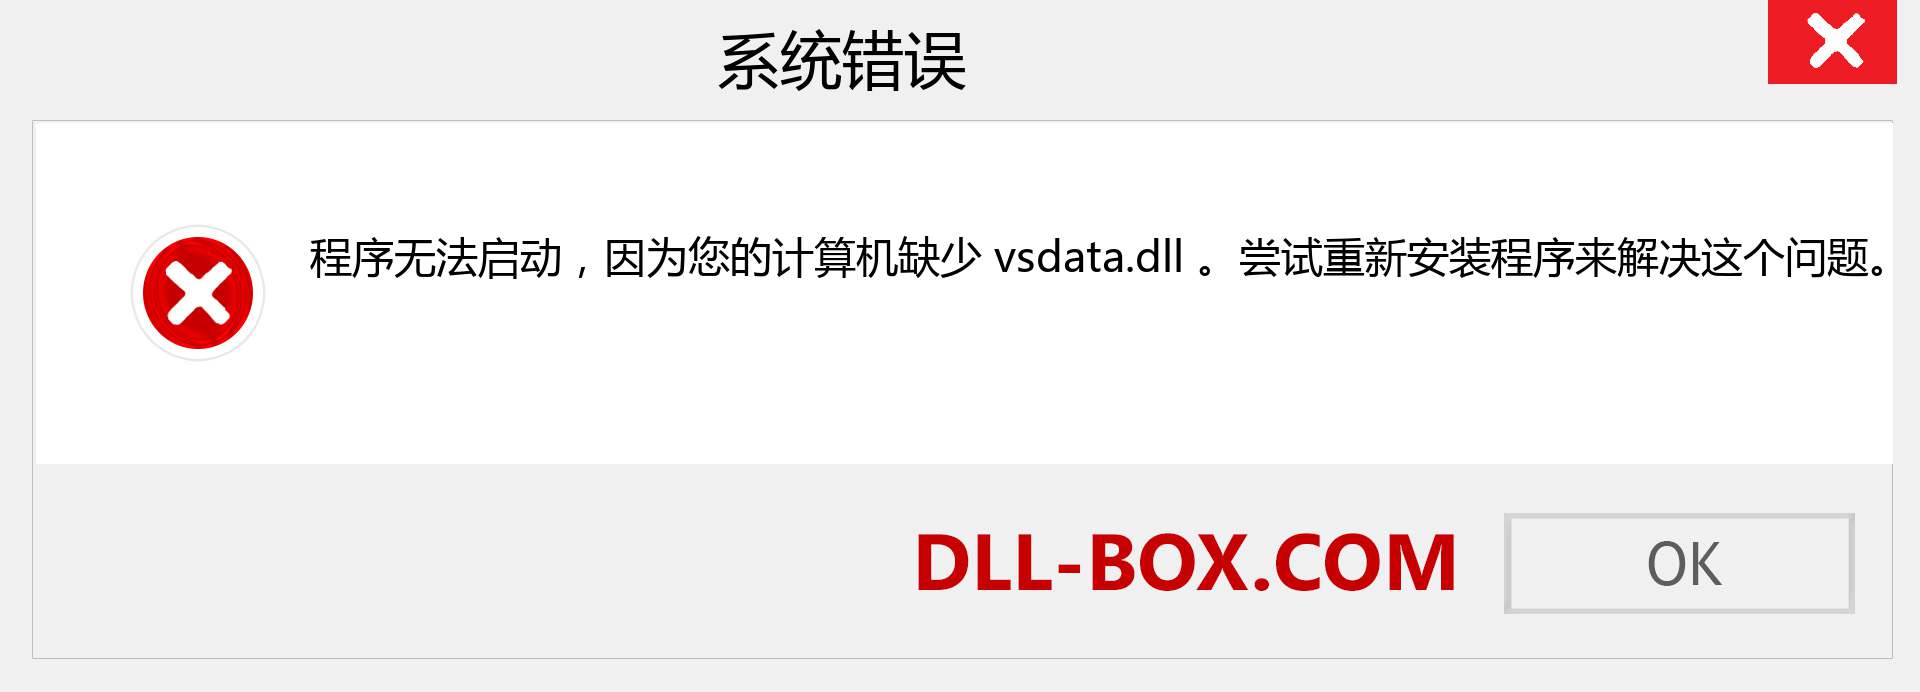 vsdata.dll 文件丢失？。 适用于 Windows 7、8、10 的下载 - 修复 Windows、照片、图像上的 vsdata dll 丢失错误